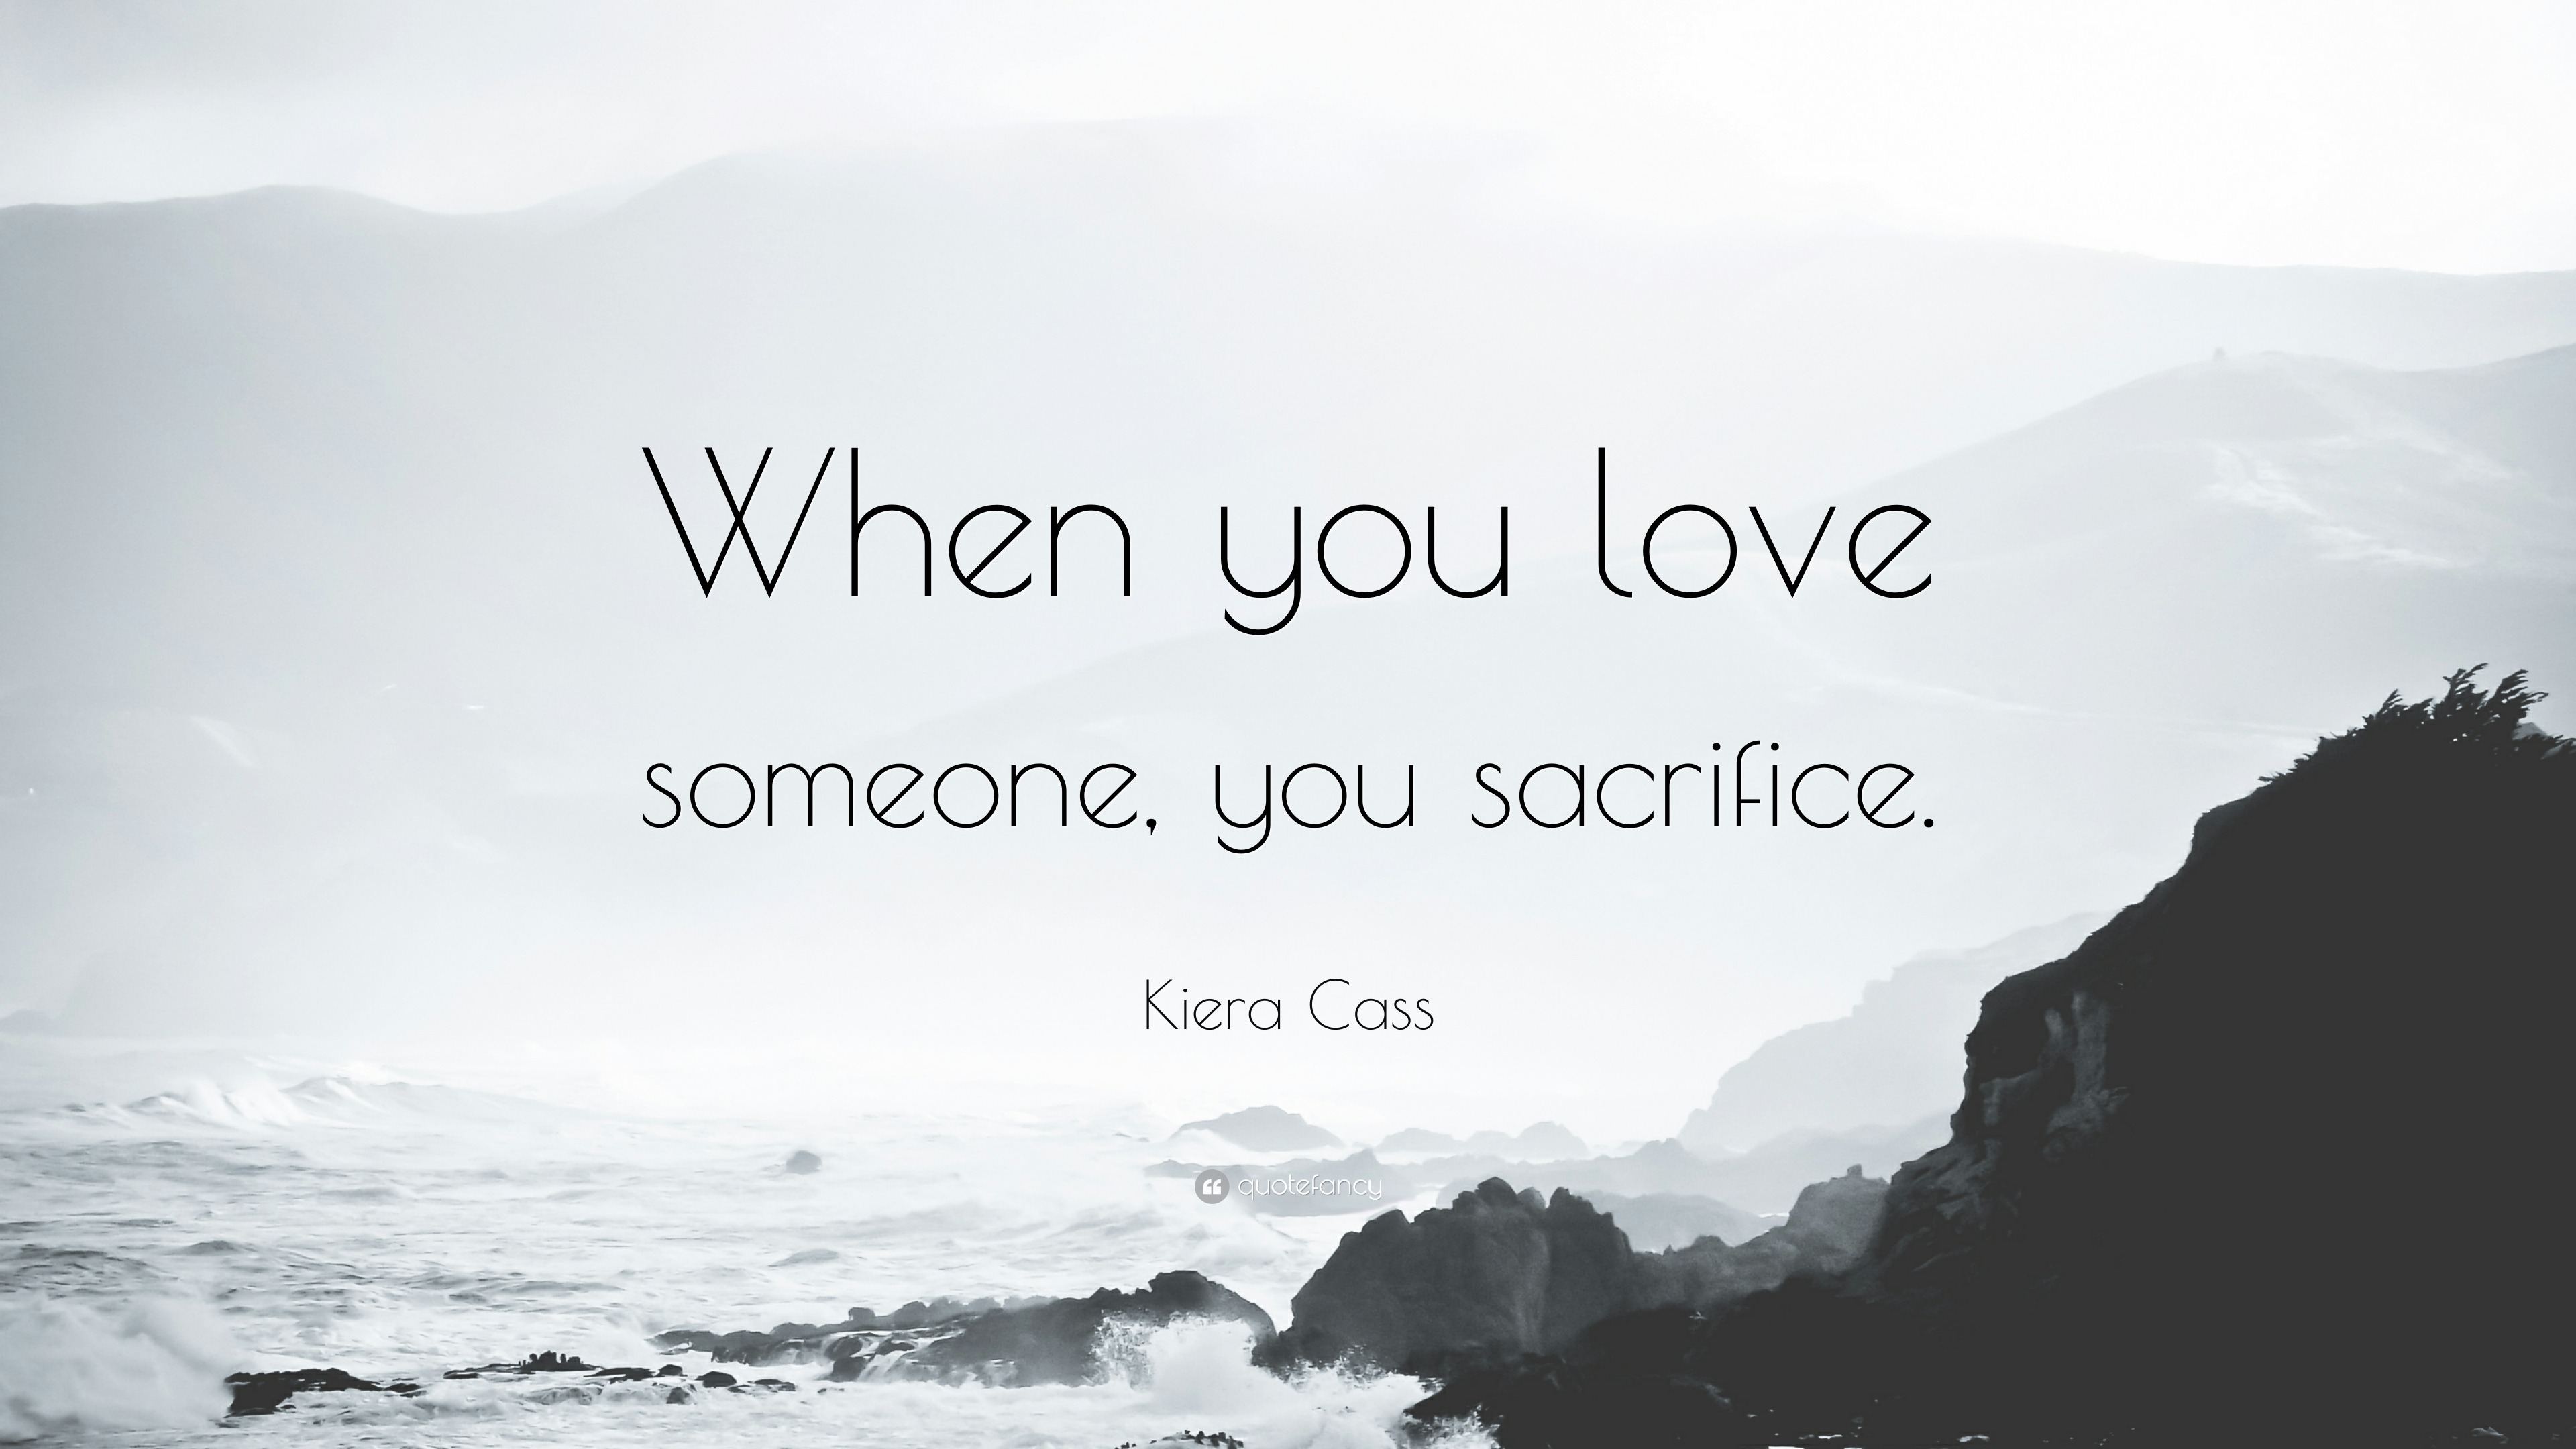 Kiera Cass Quote “When you love someone you sacrifice ”